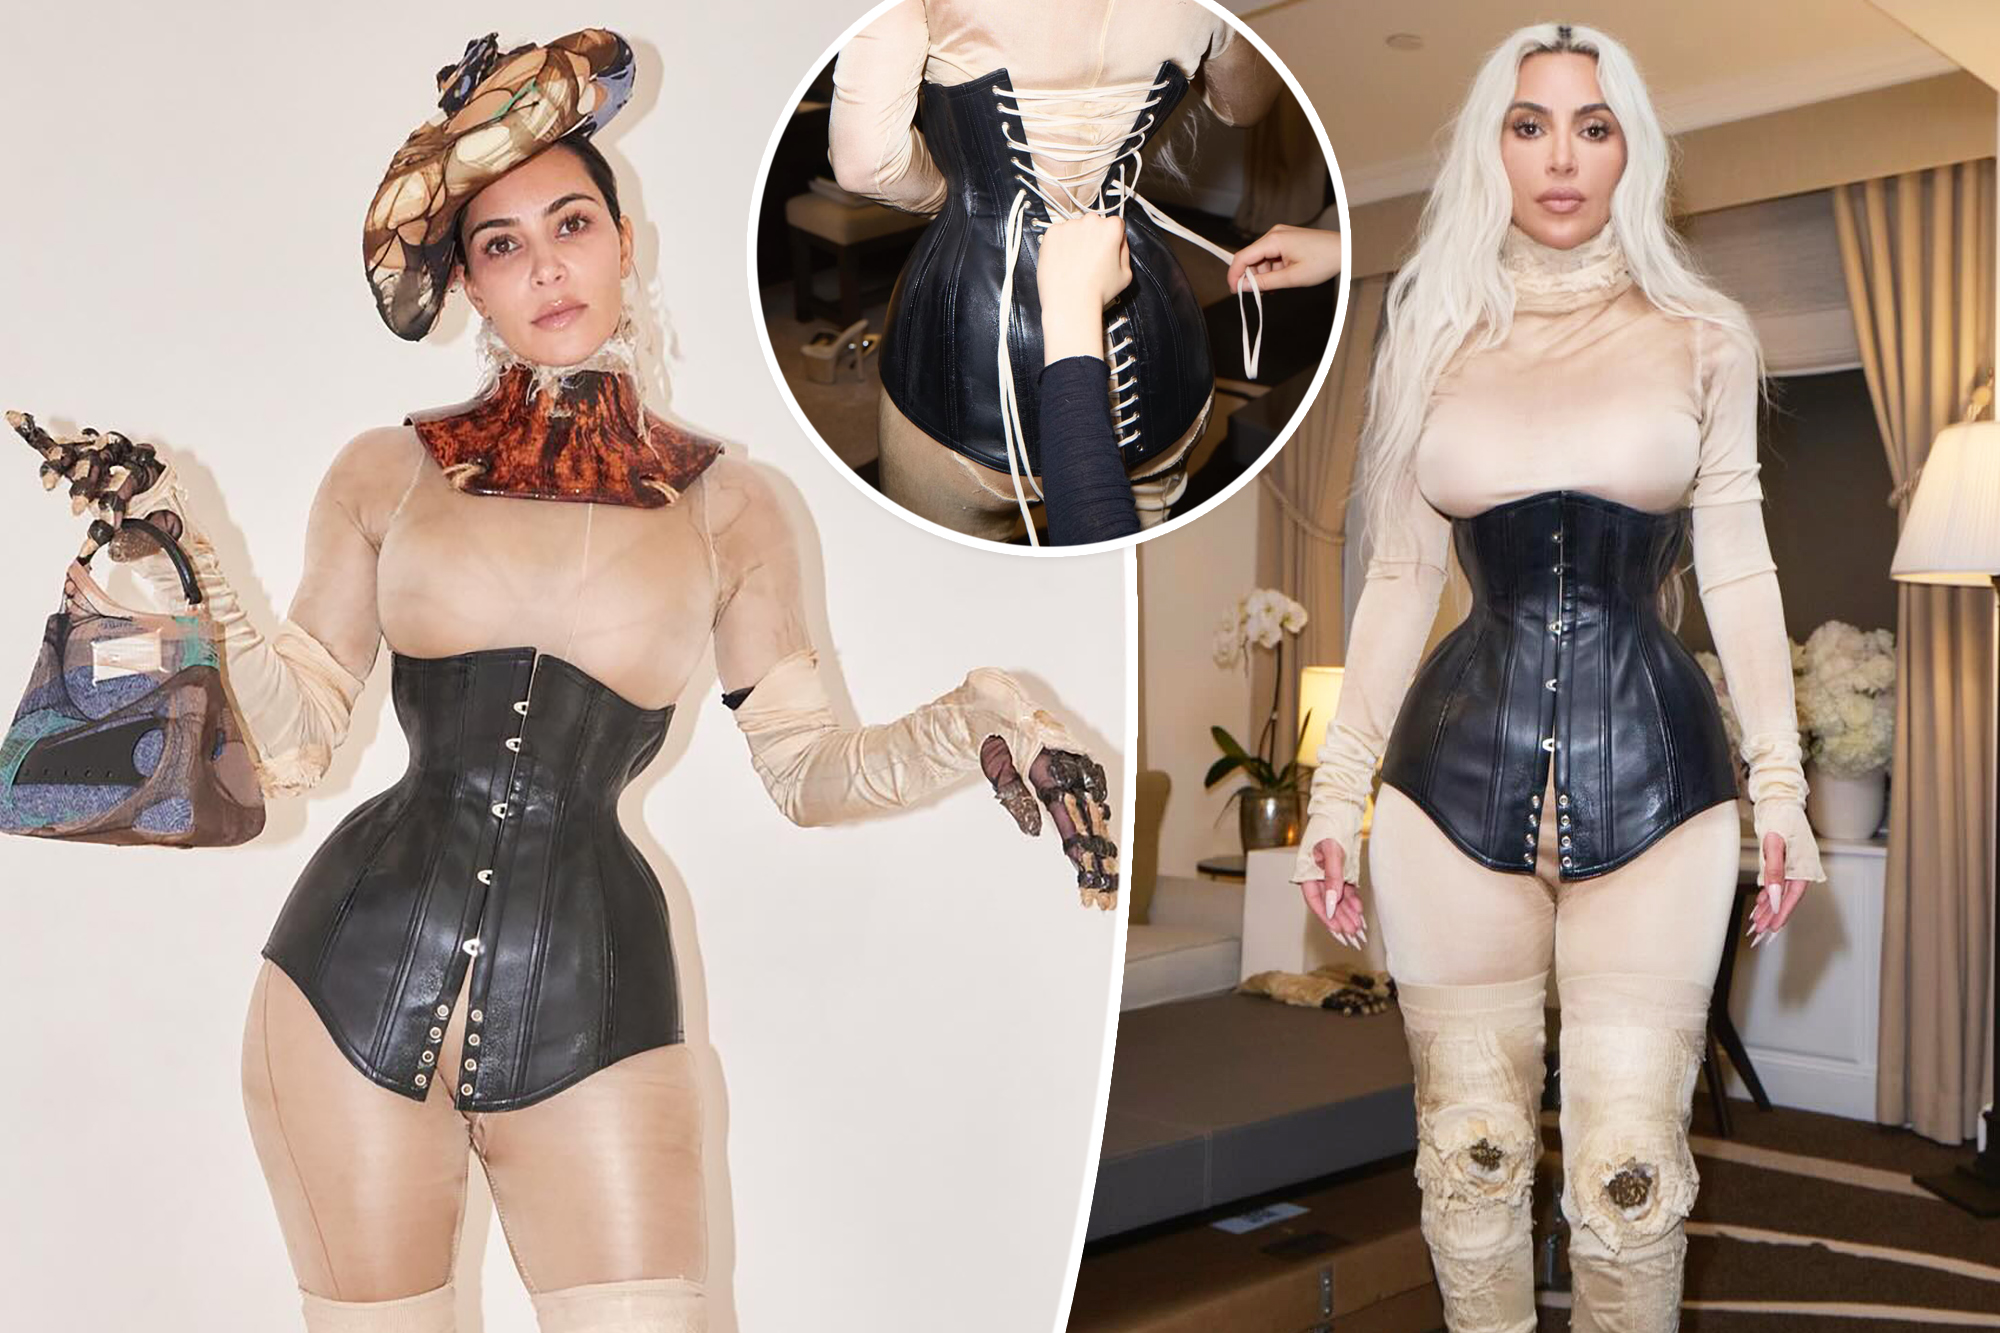 Kim Kardashian roasted for ‘broken doll’-inspired look after Met Gala: ‘It’s giving… lost organs’